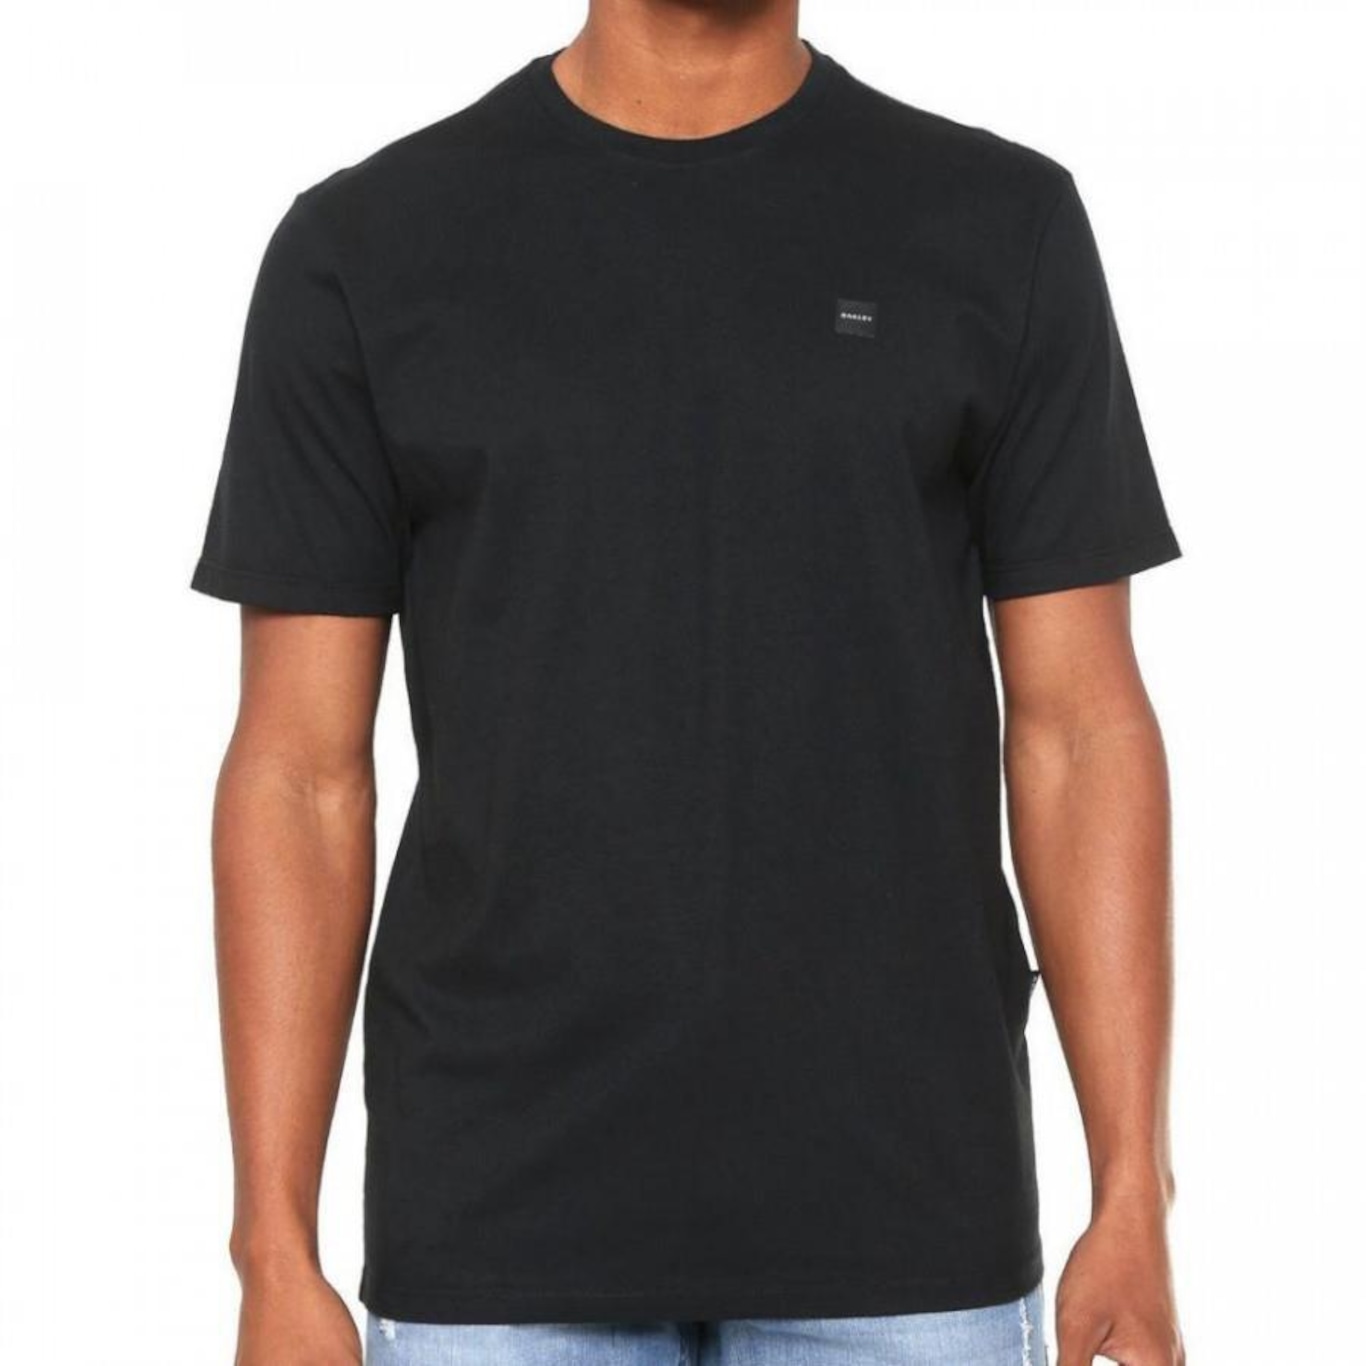 Camiseta Oakley Patch 2.0 Masculina - Vermelho Escuro